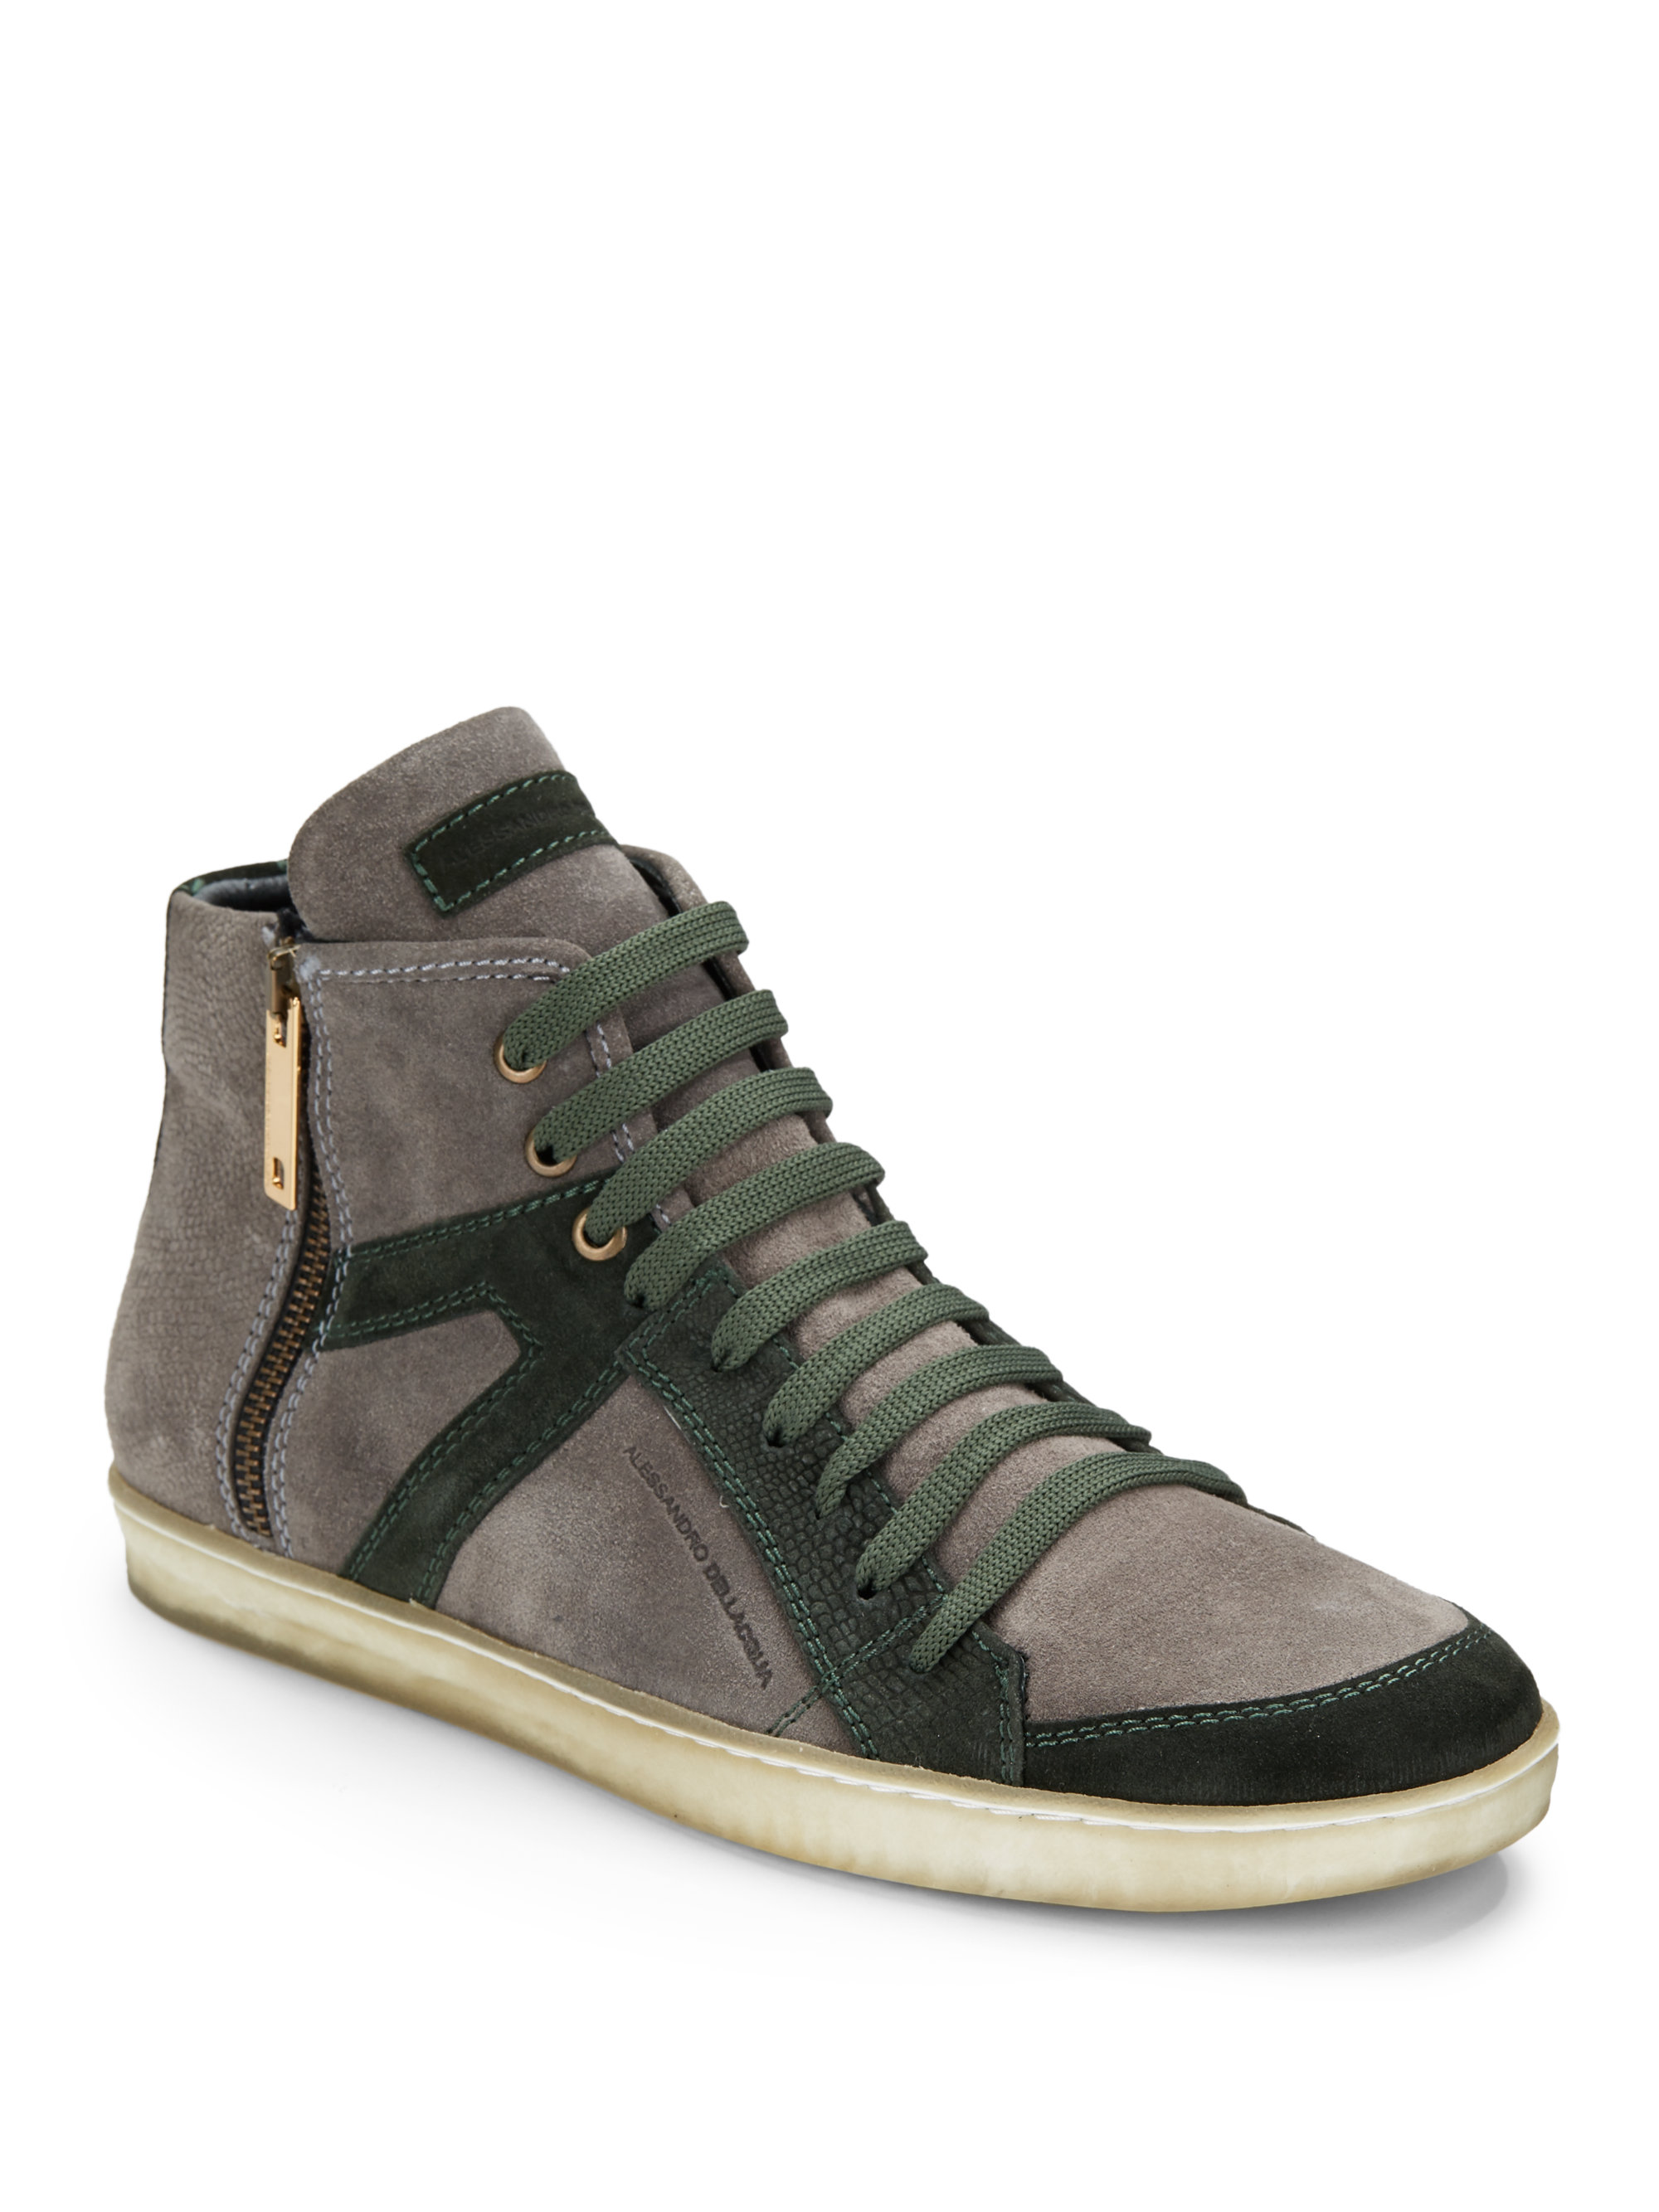 Alessandro Dell'acqua Hightop Suede Sidezip Sneakers in Gray for Men ...